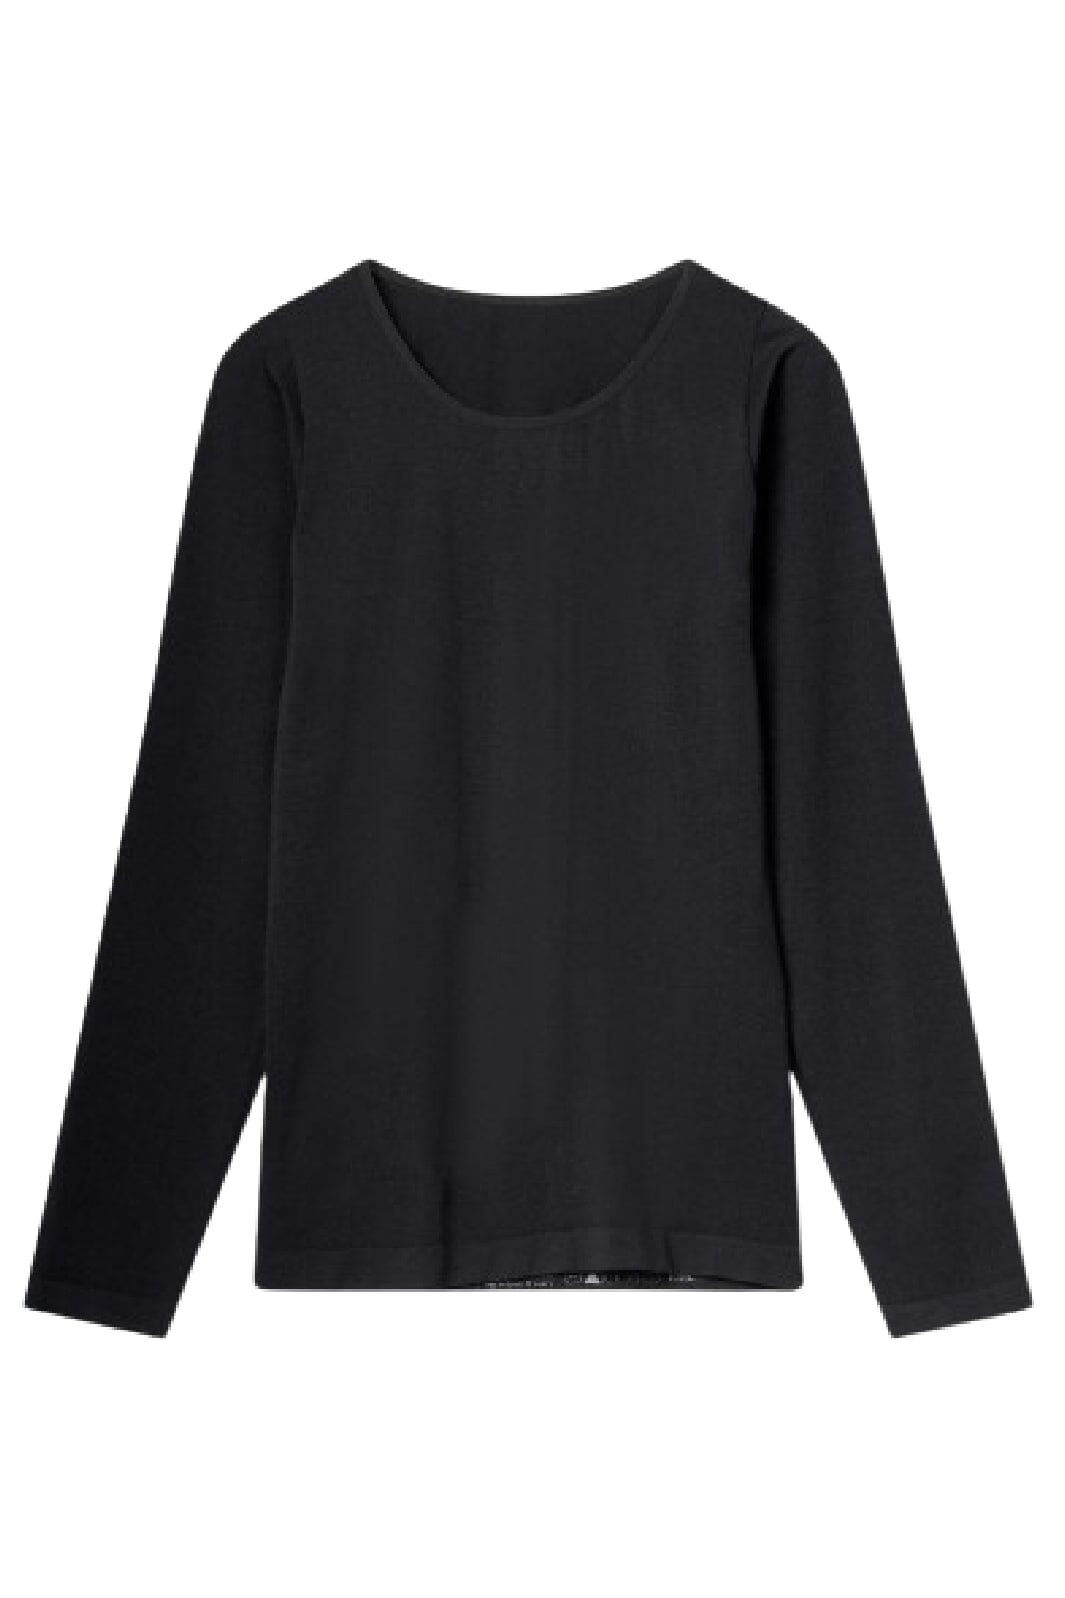 Molly&My Wardrobe - Luise Shirt - Black Bluser 